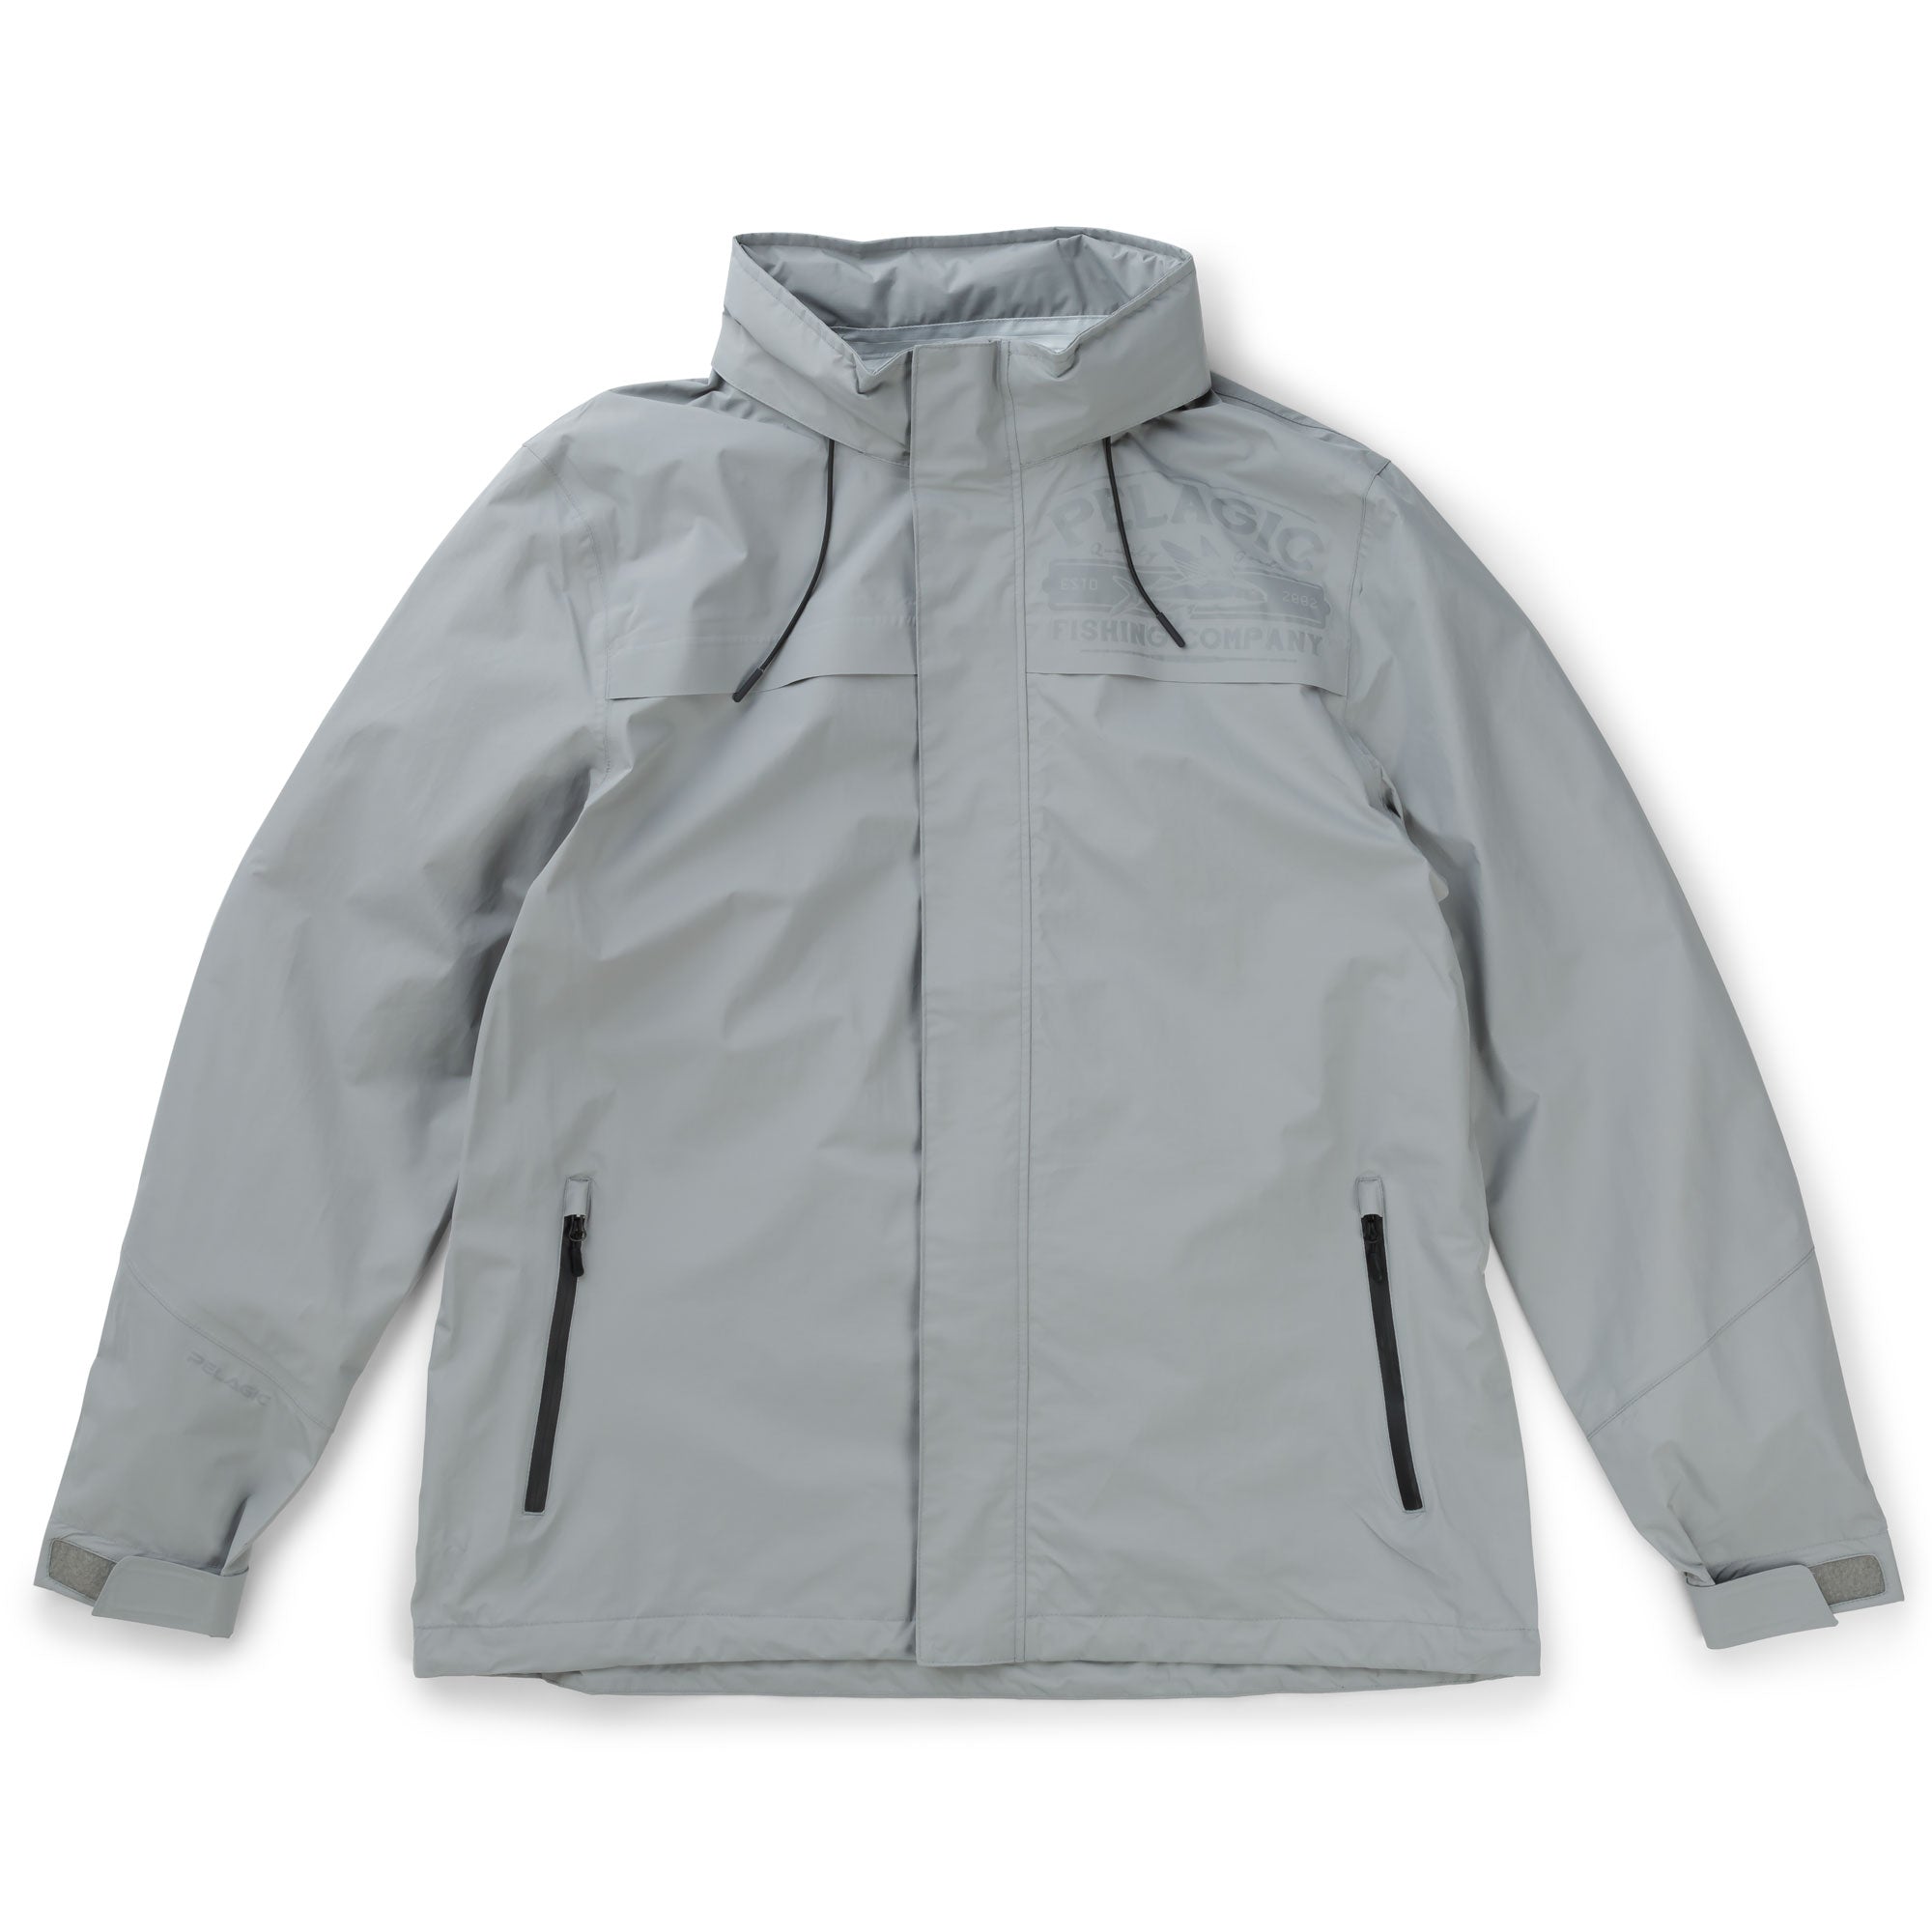 Pelagic Outrigger Lightweight Jacket - Grey - Medium